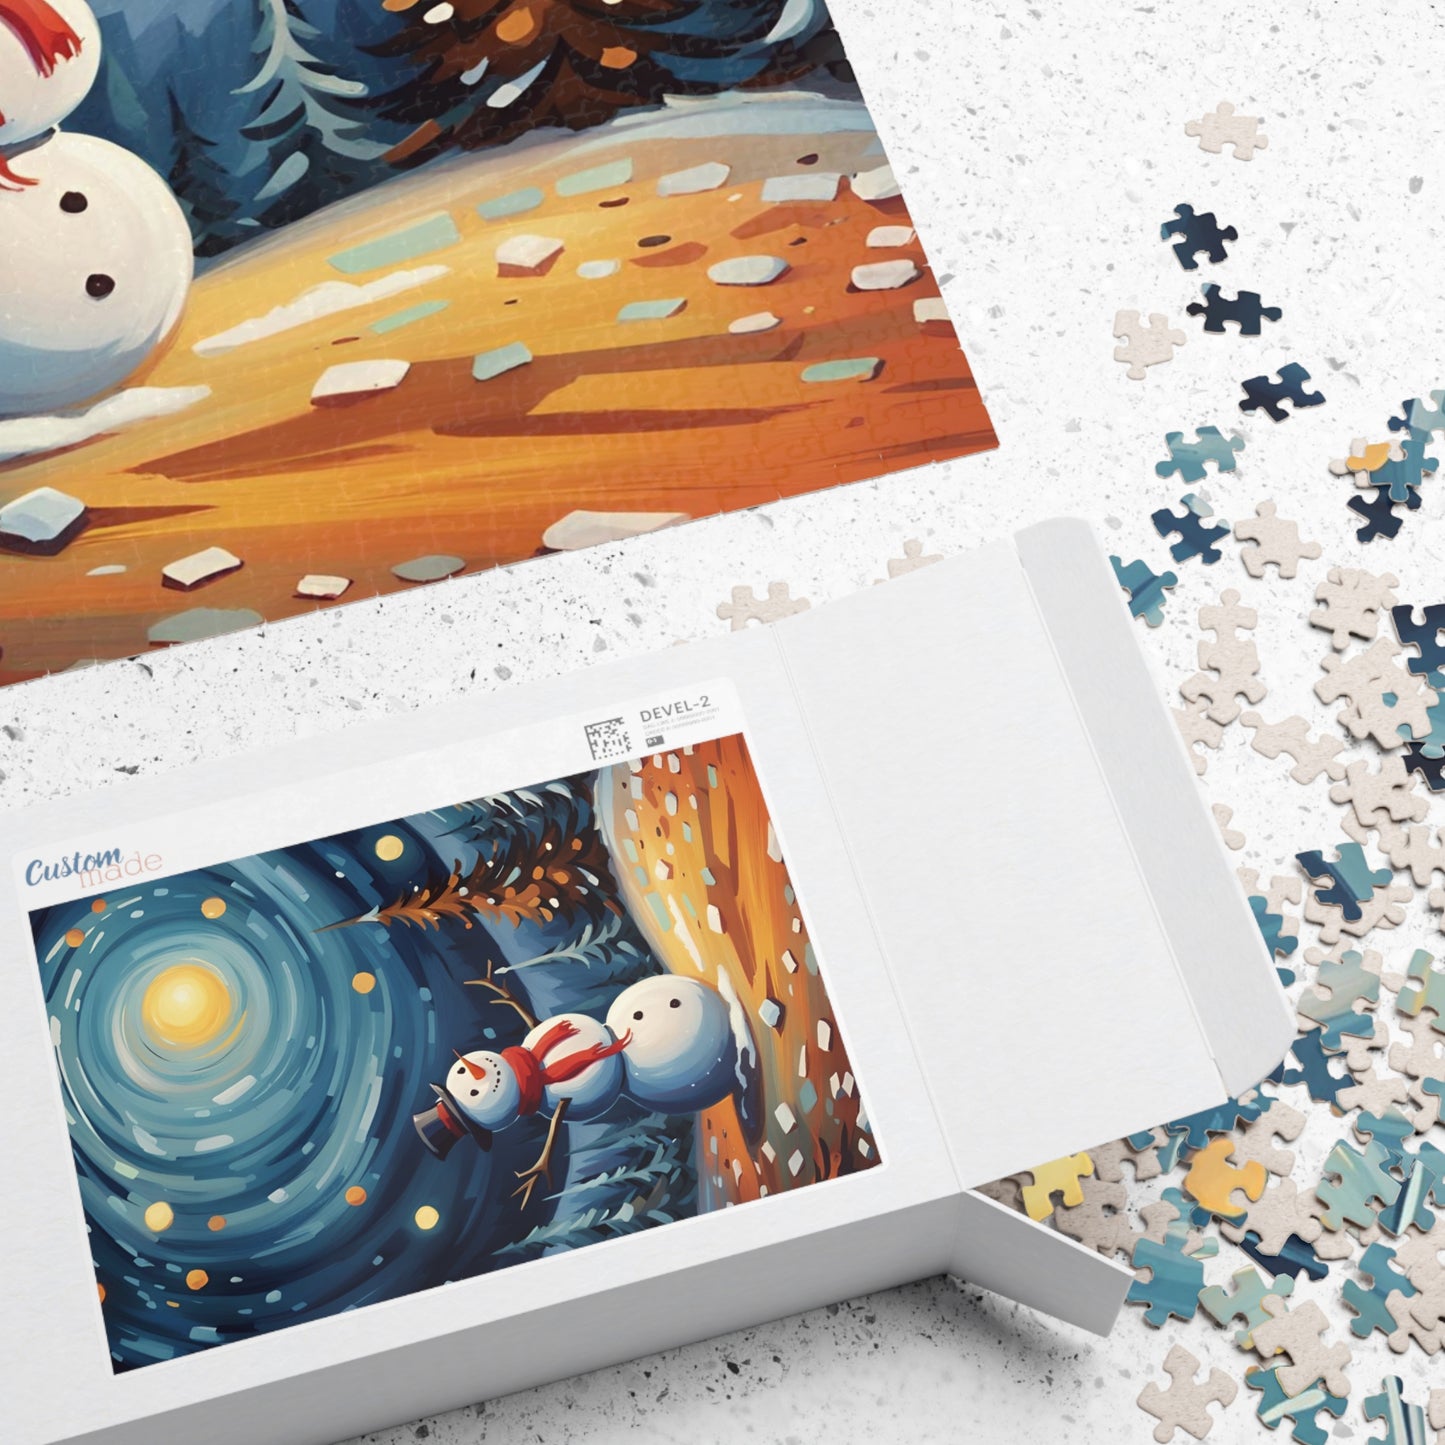 Christmas Sky Puzzle (110, 252, 500, 1014-piece)